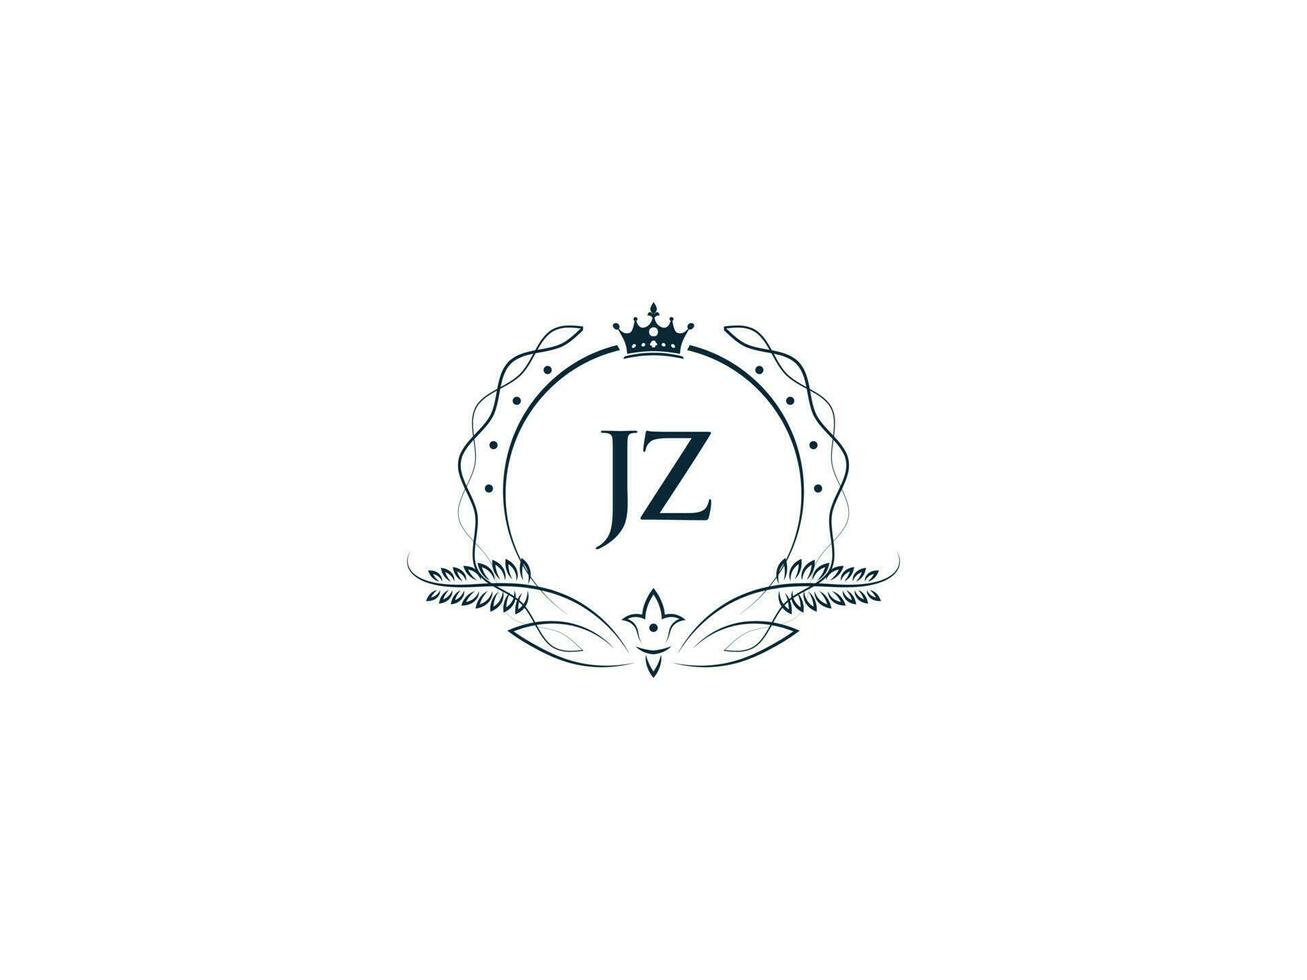 monogram jz feminin företag logotyp design, lyx jz zj kunglig krona logotyp ikon vektor